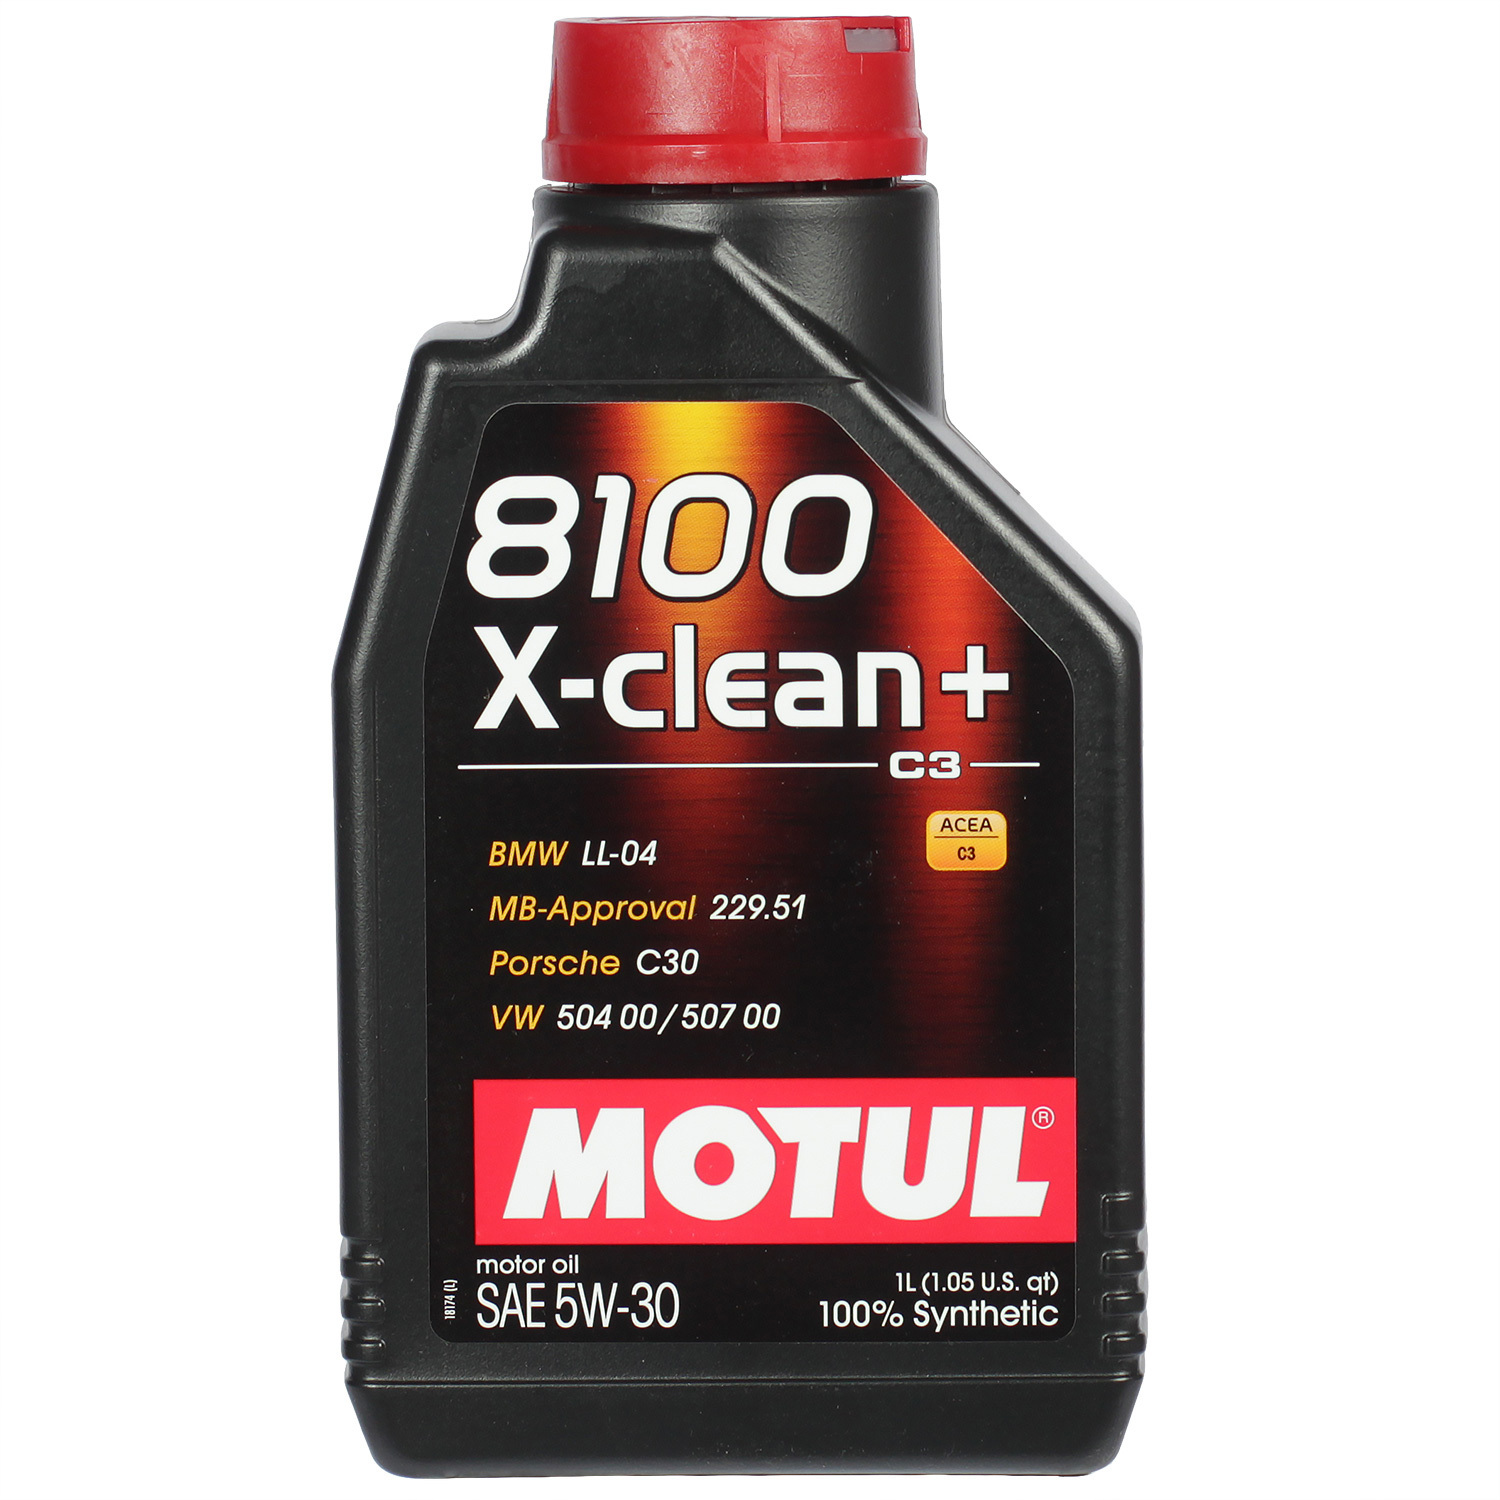 Motul Моторное масло Motul 8100 X-clean+ 5W-30, 1 л motul моторное масло motul 8100 x clean 5w 30 1 л